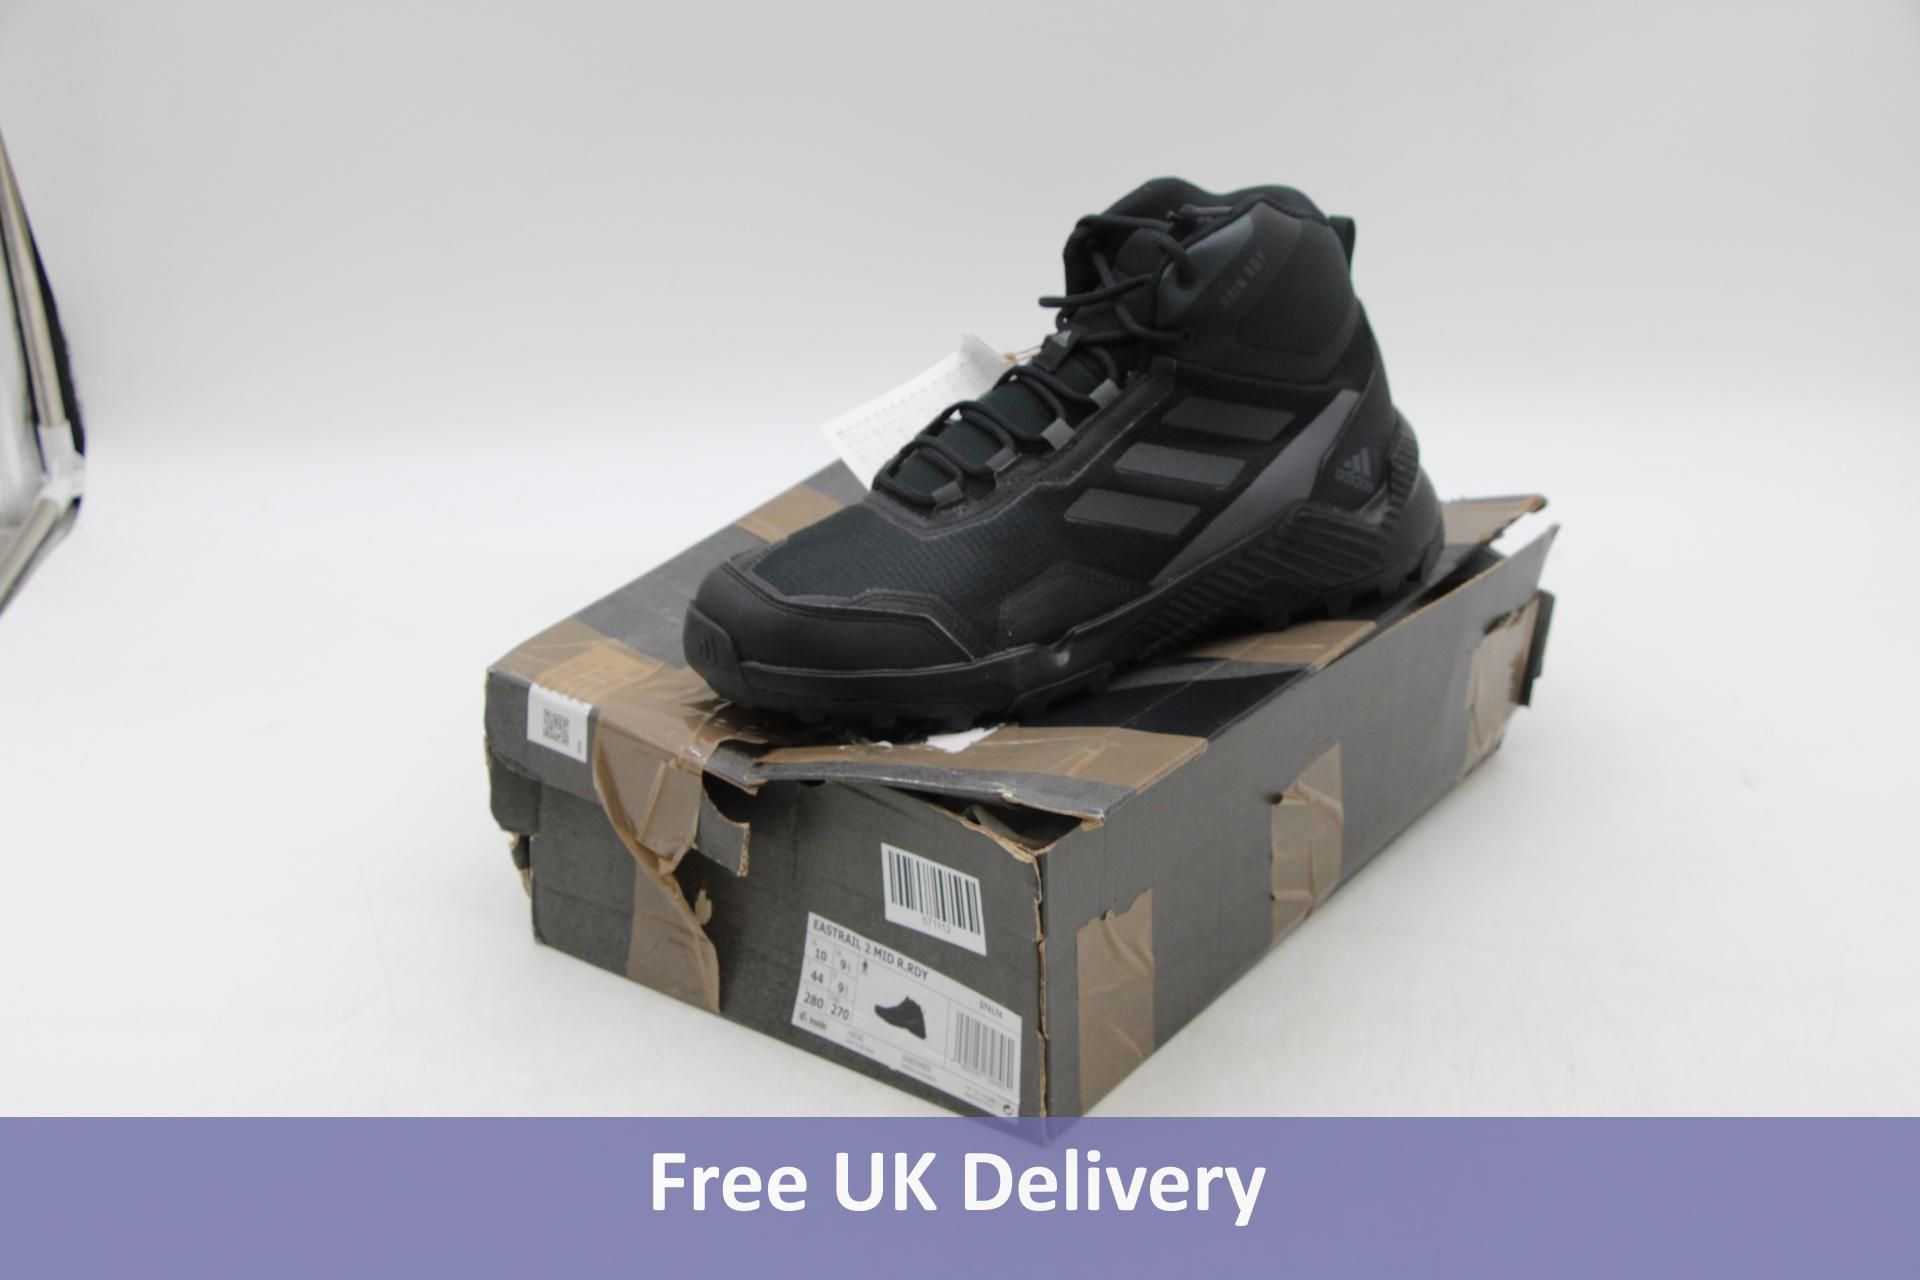 Adidas, Eastrail 2 Mid R.RDY Hiking Shoes, Black, UK 9.5. Box damaged